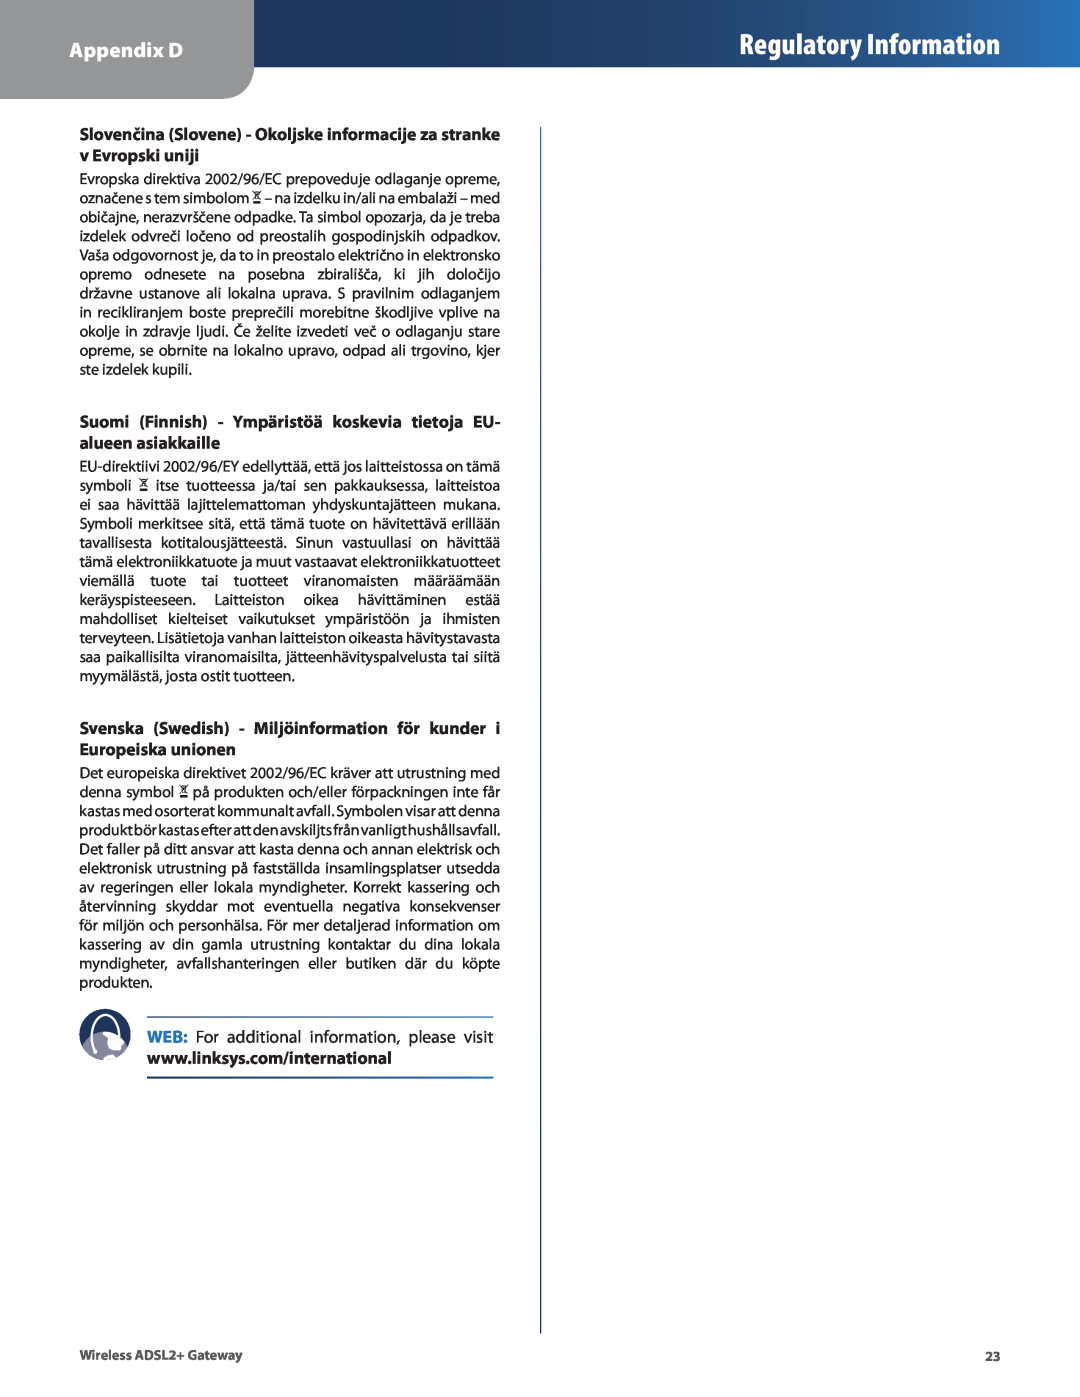 Linksys WAG54G2 Regulatory Information, Appendix D, Slovenčina Slovene - Okoljske informacije za stranke v Evropski uniji 